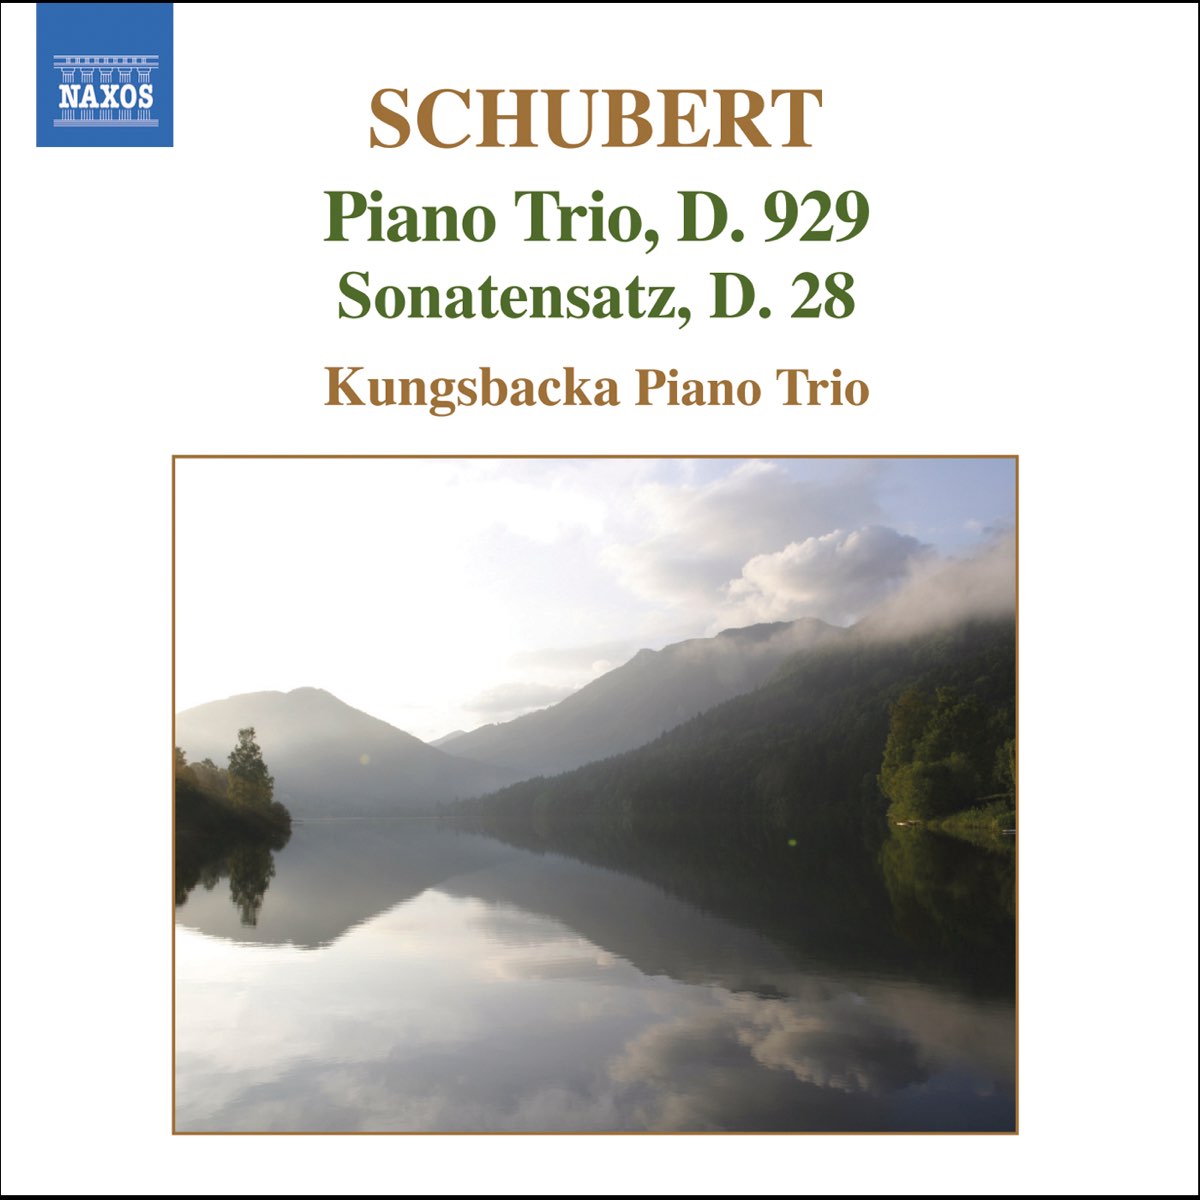 Schubert: Piano Trio No. 2 in E Flat Major - Sonatensatz by Kungsbacka Piano  Trio on Apple Music